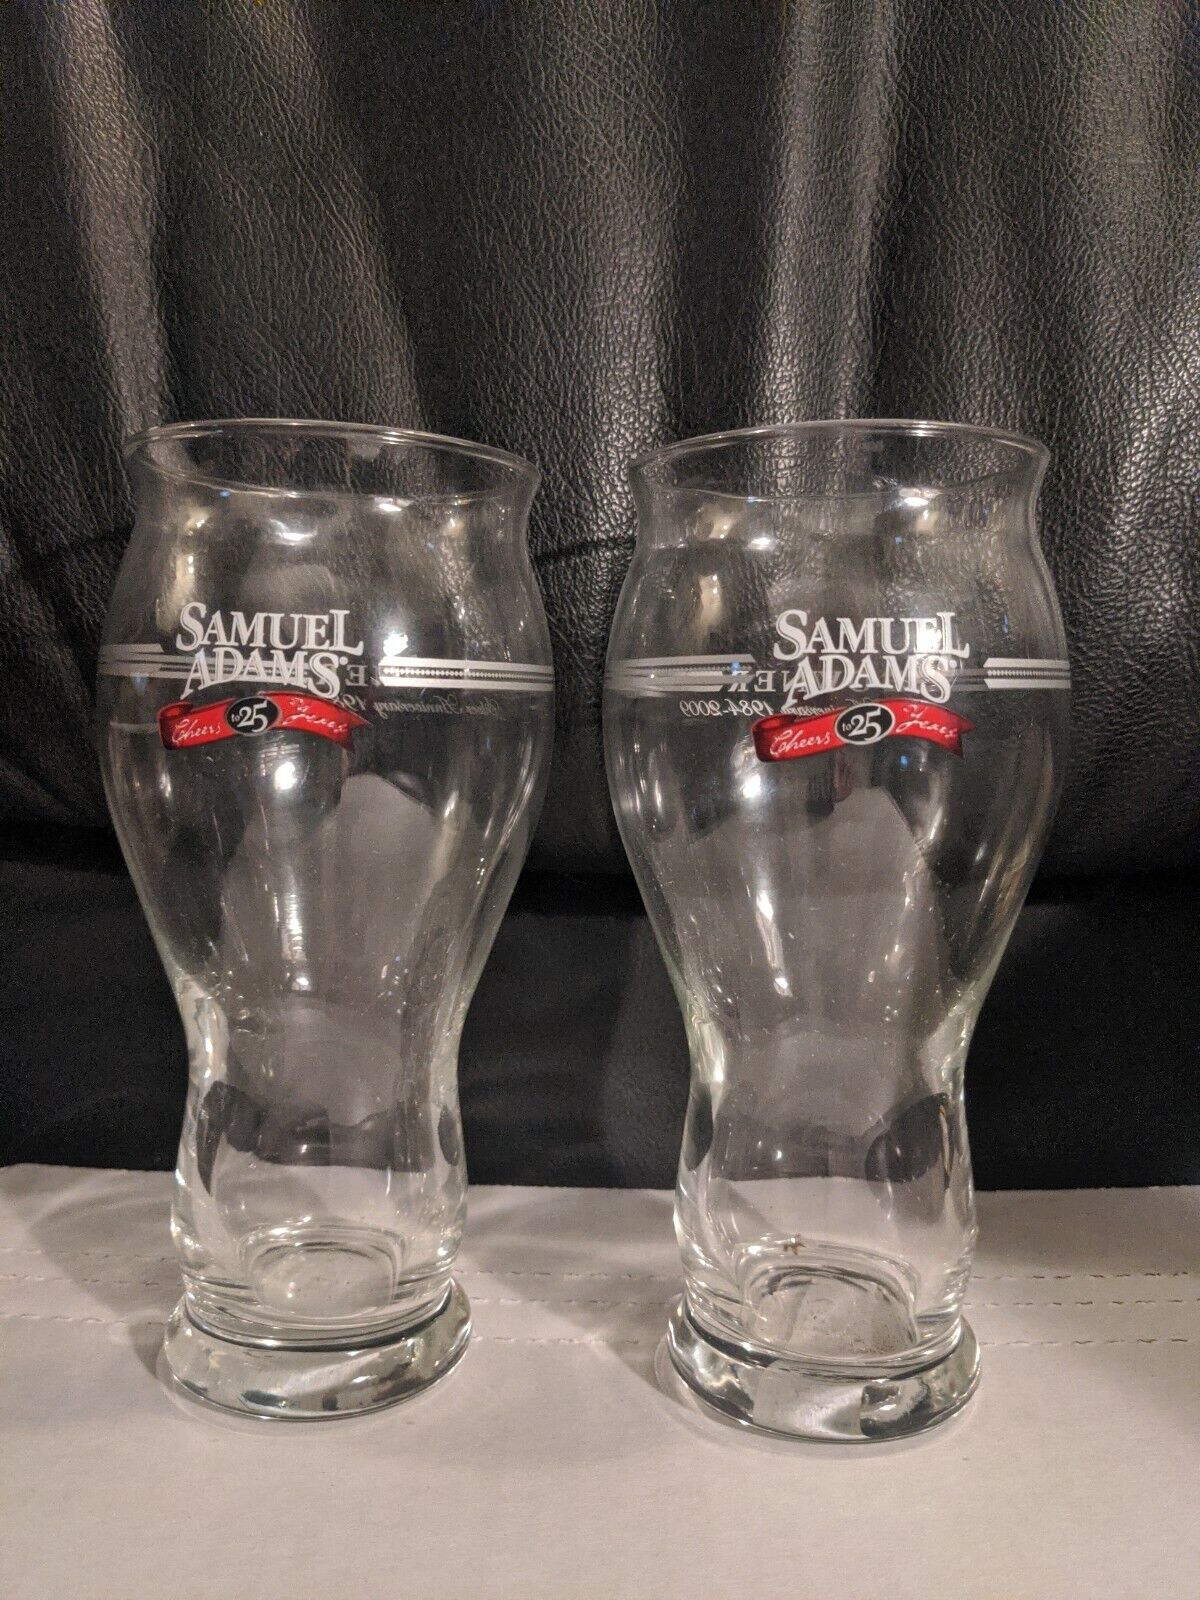  Samuel Sam Adams Boston Lager Glass 16 Oz. "Owner 1984-2009" Silver Lot of 2 Samuel Adams